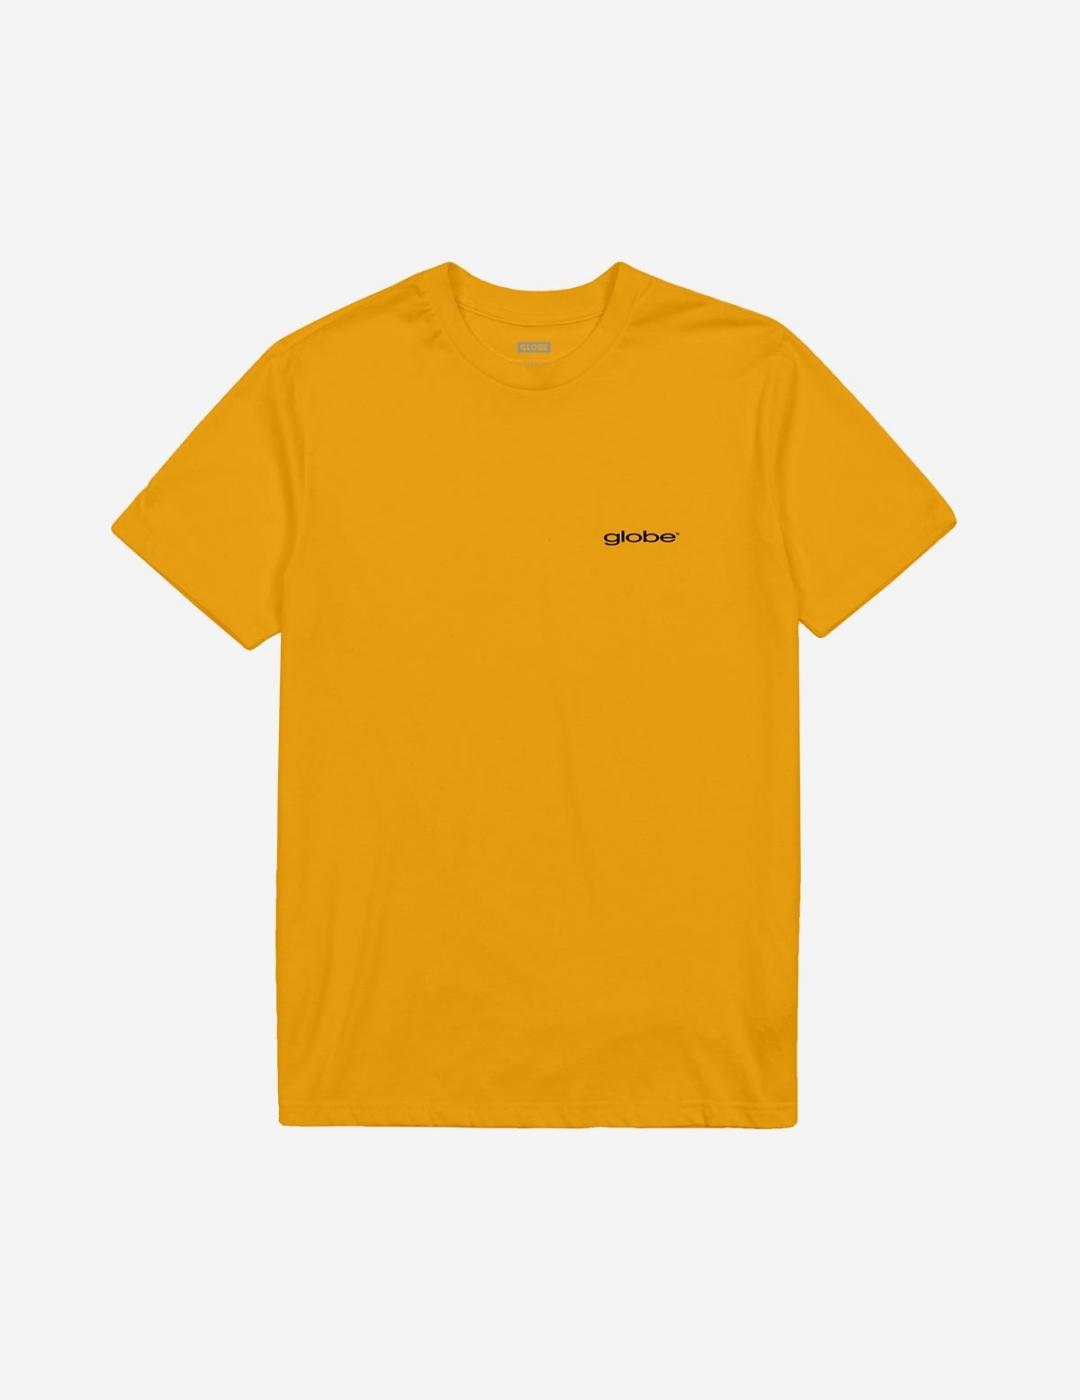 Camiseta GLOBE OVAL - Citrus